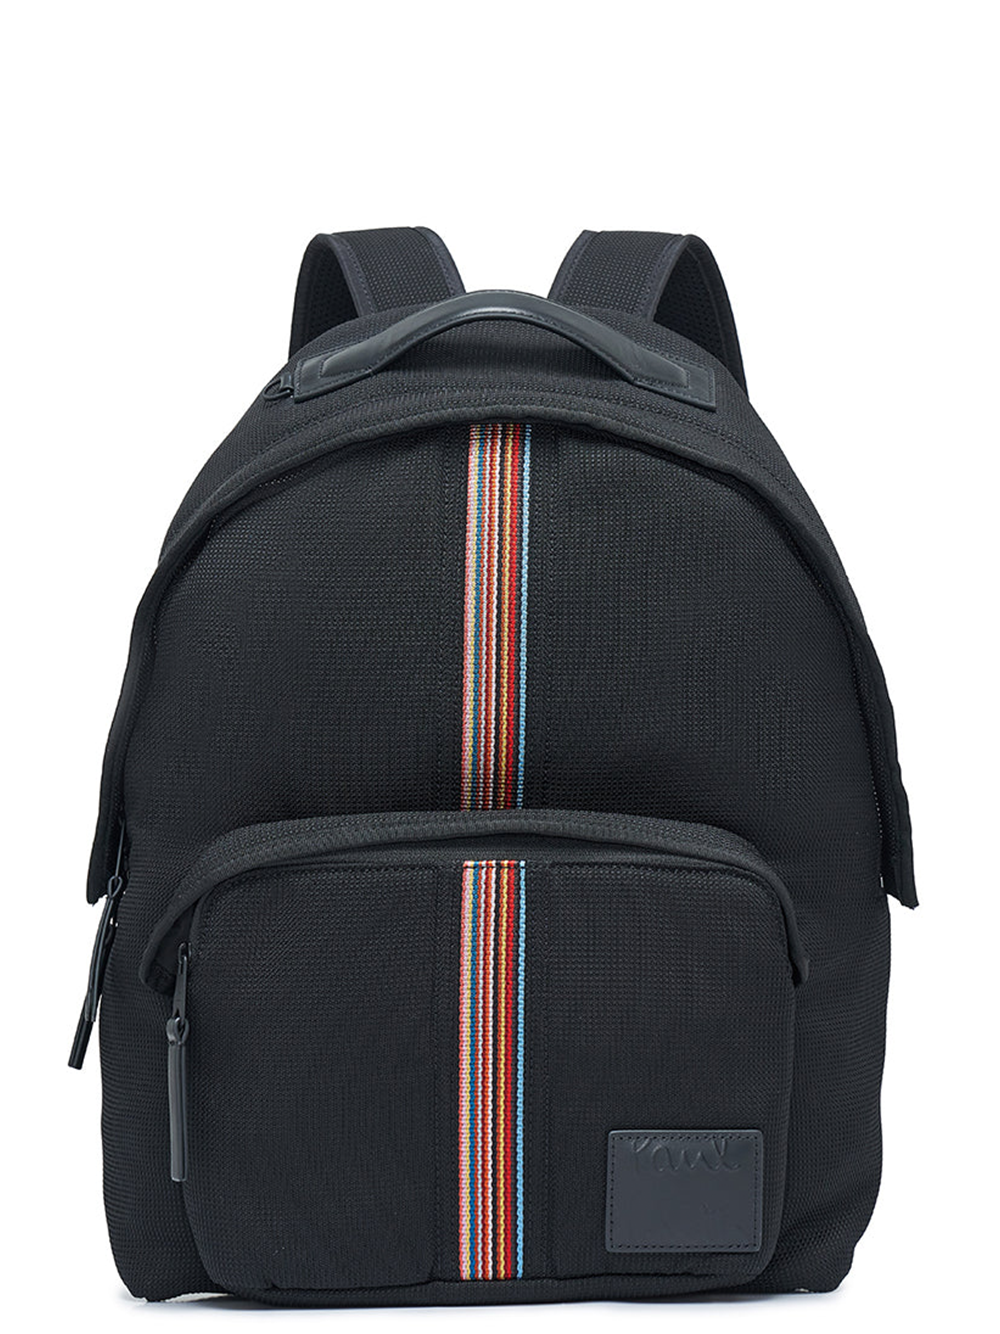      Paul-Smith-Multi-Backpack-Black-1